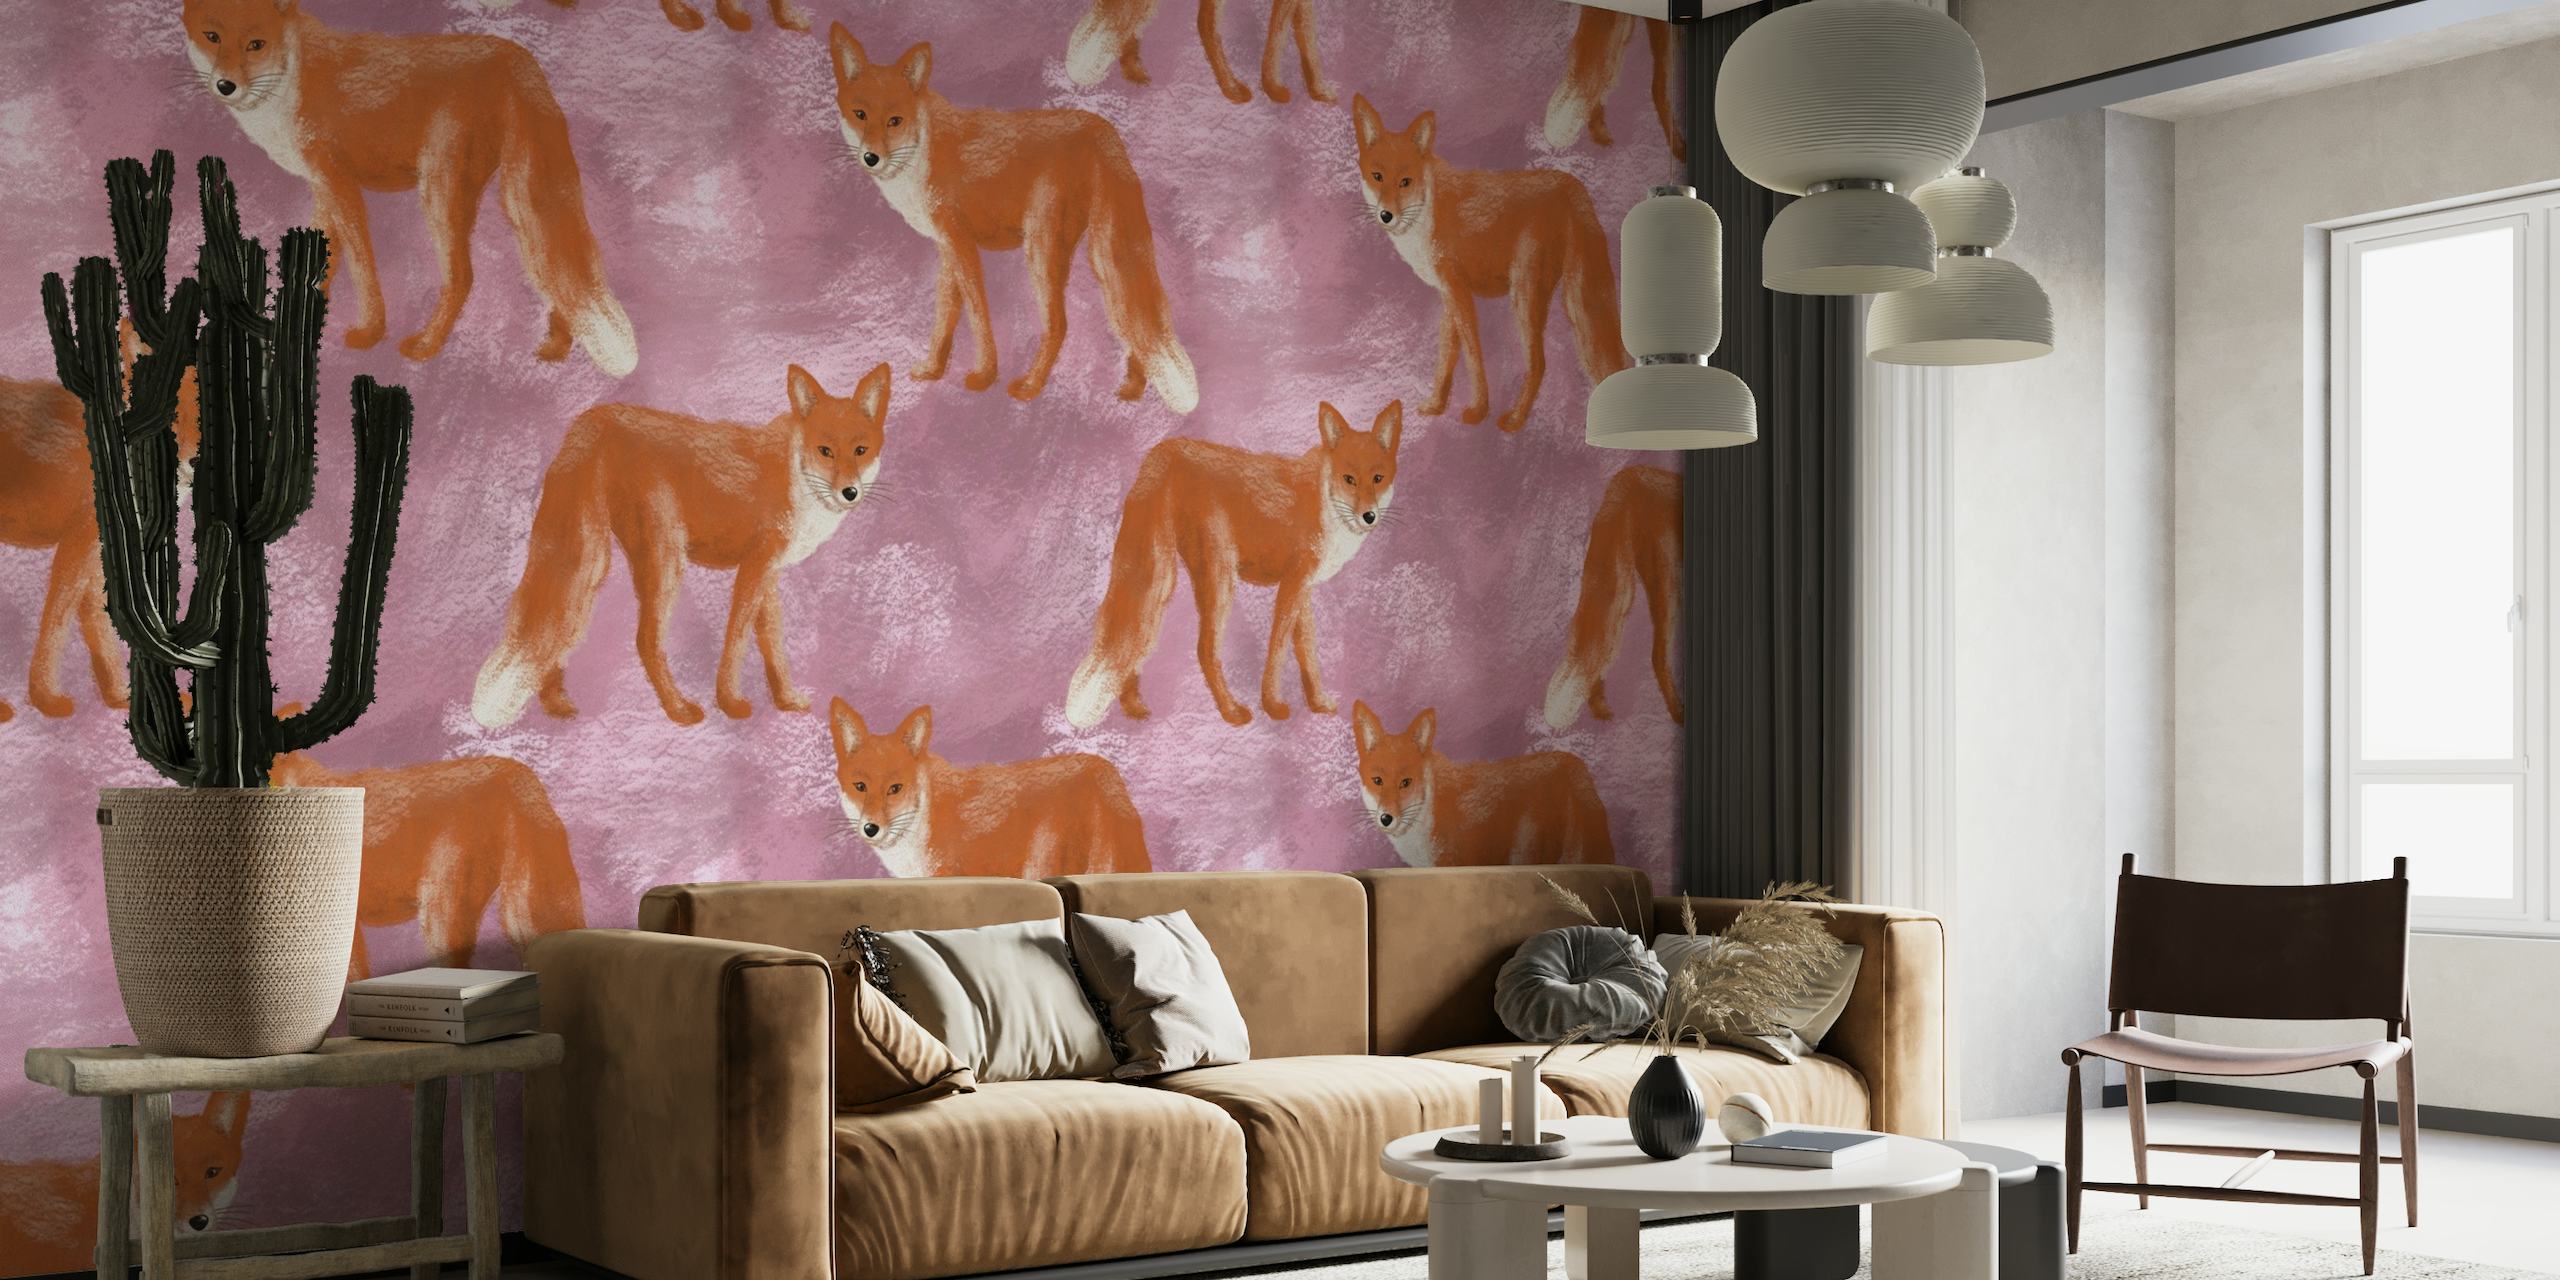 Čudovite lisice na ružičastom zidnom zidu u gvaš pozadini